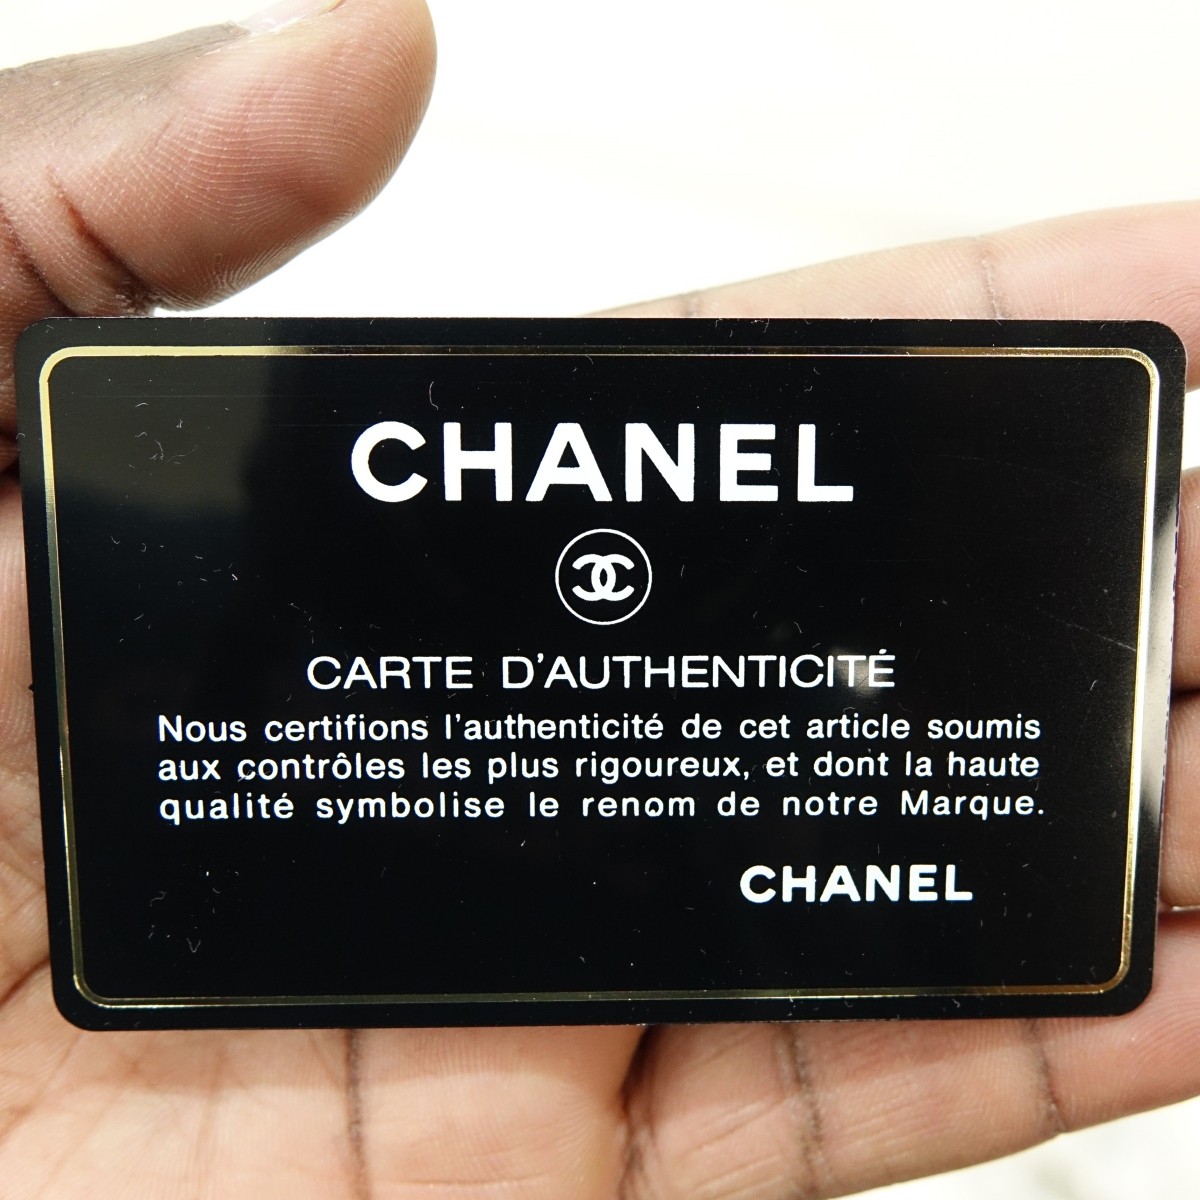 Chanel Beige Leather Rectangular Single Flap Bag